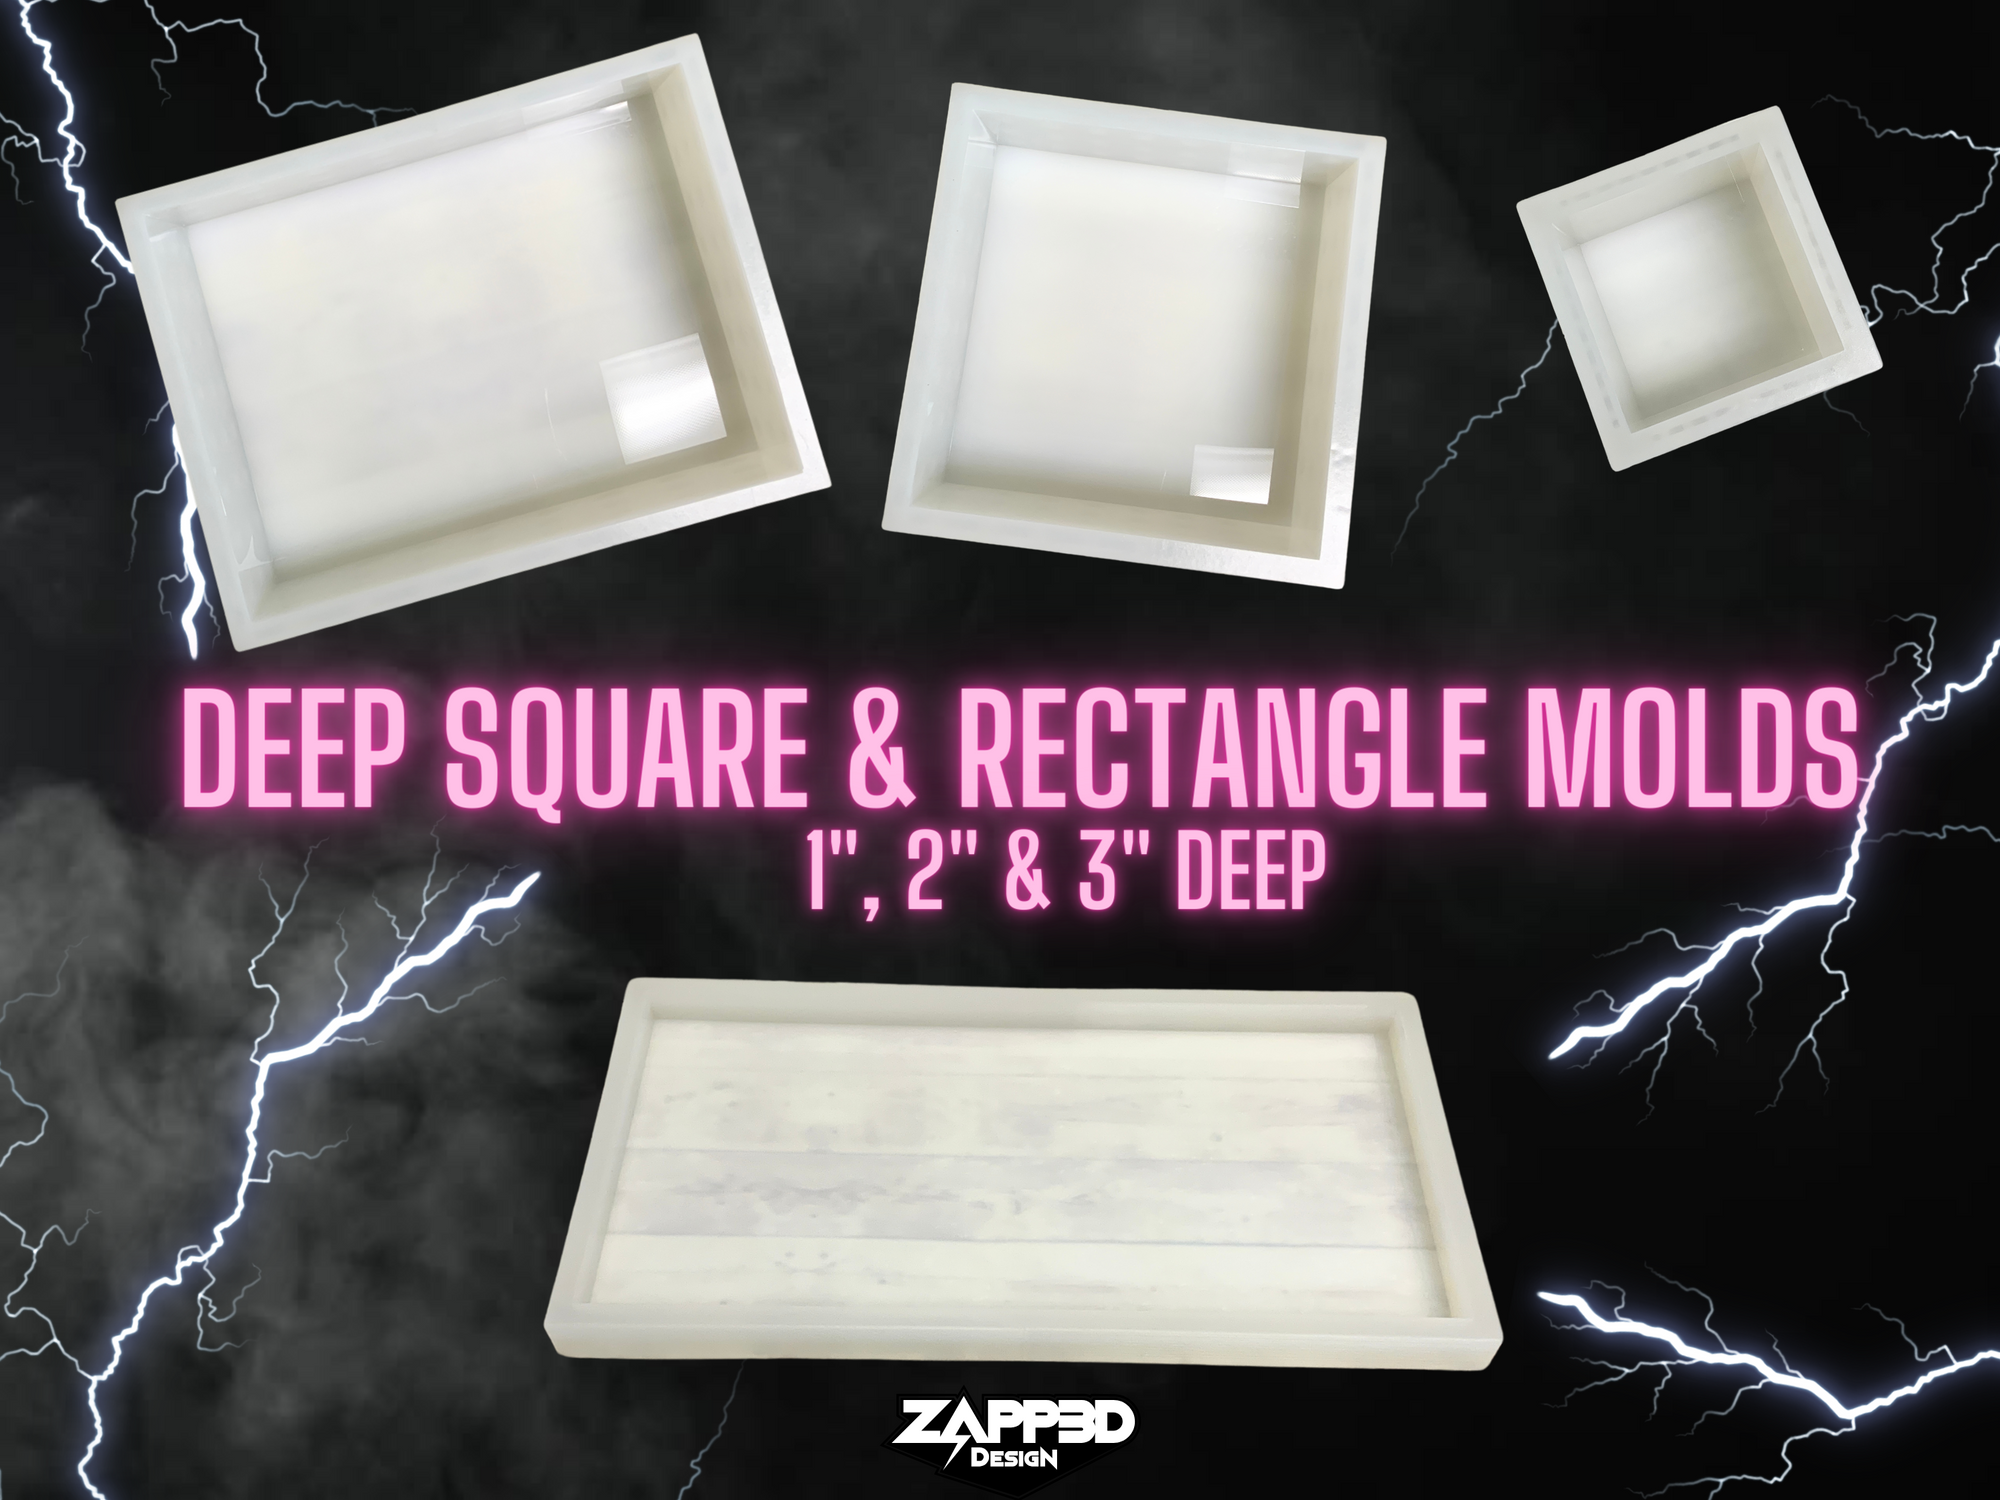 Deep Square & Rectangle Molds - 1" - 2" - 3" Deep